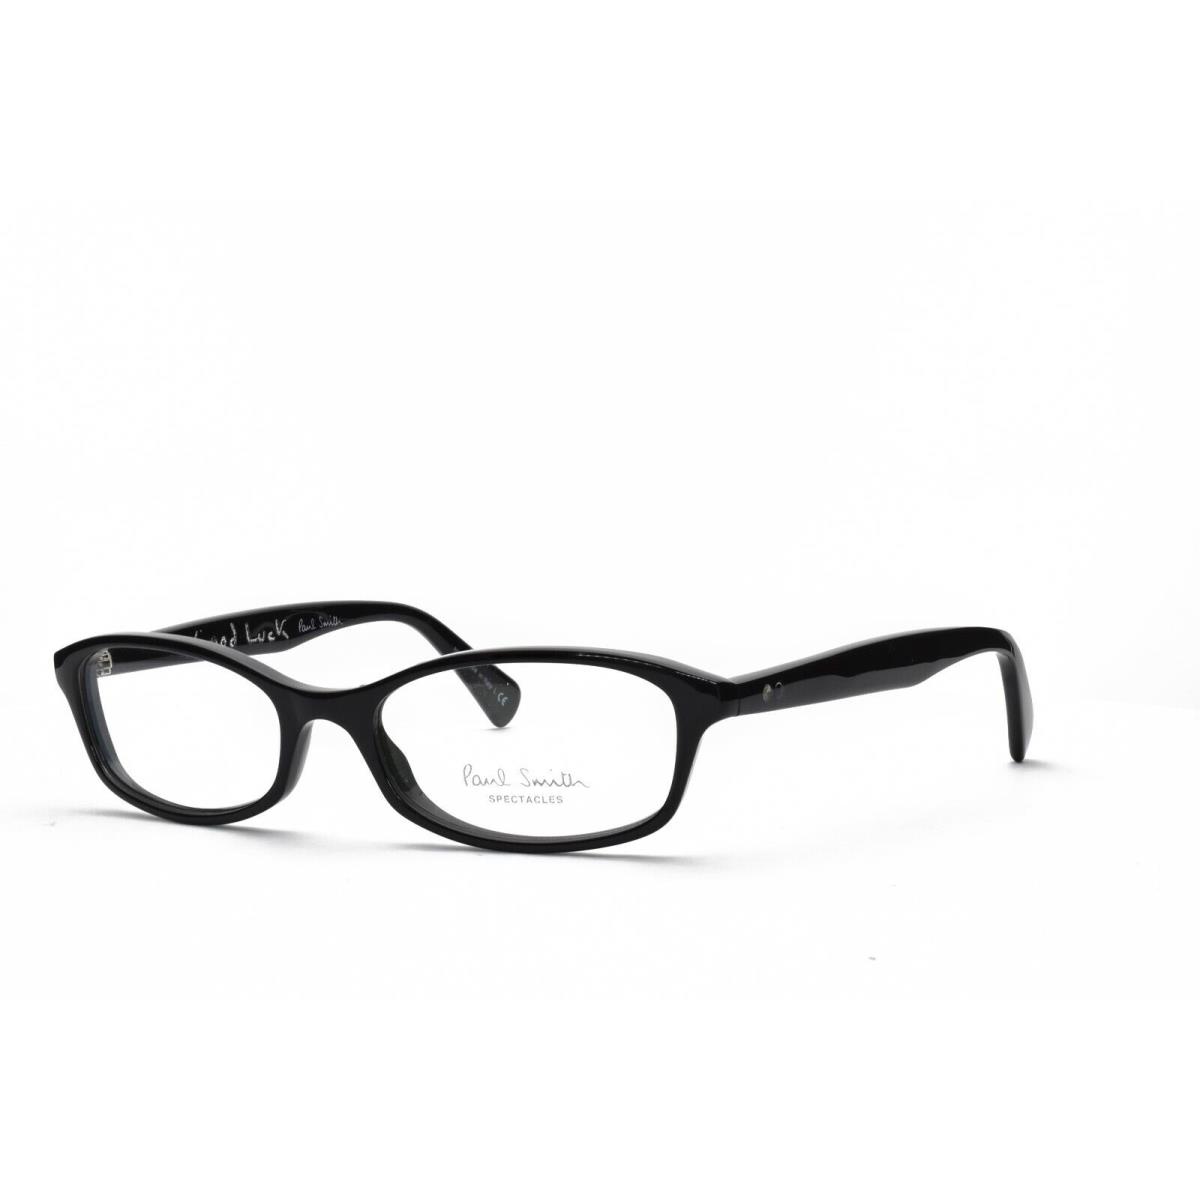 Paul Smith PS Hann 8127 1005 Eyeglasses Frames Only 49-16-140